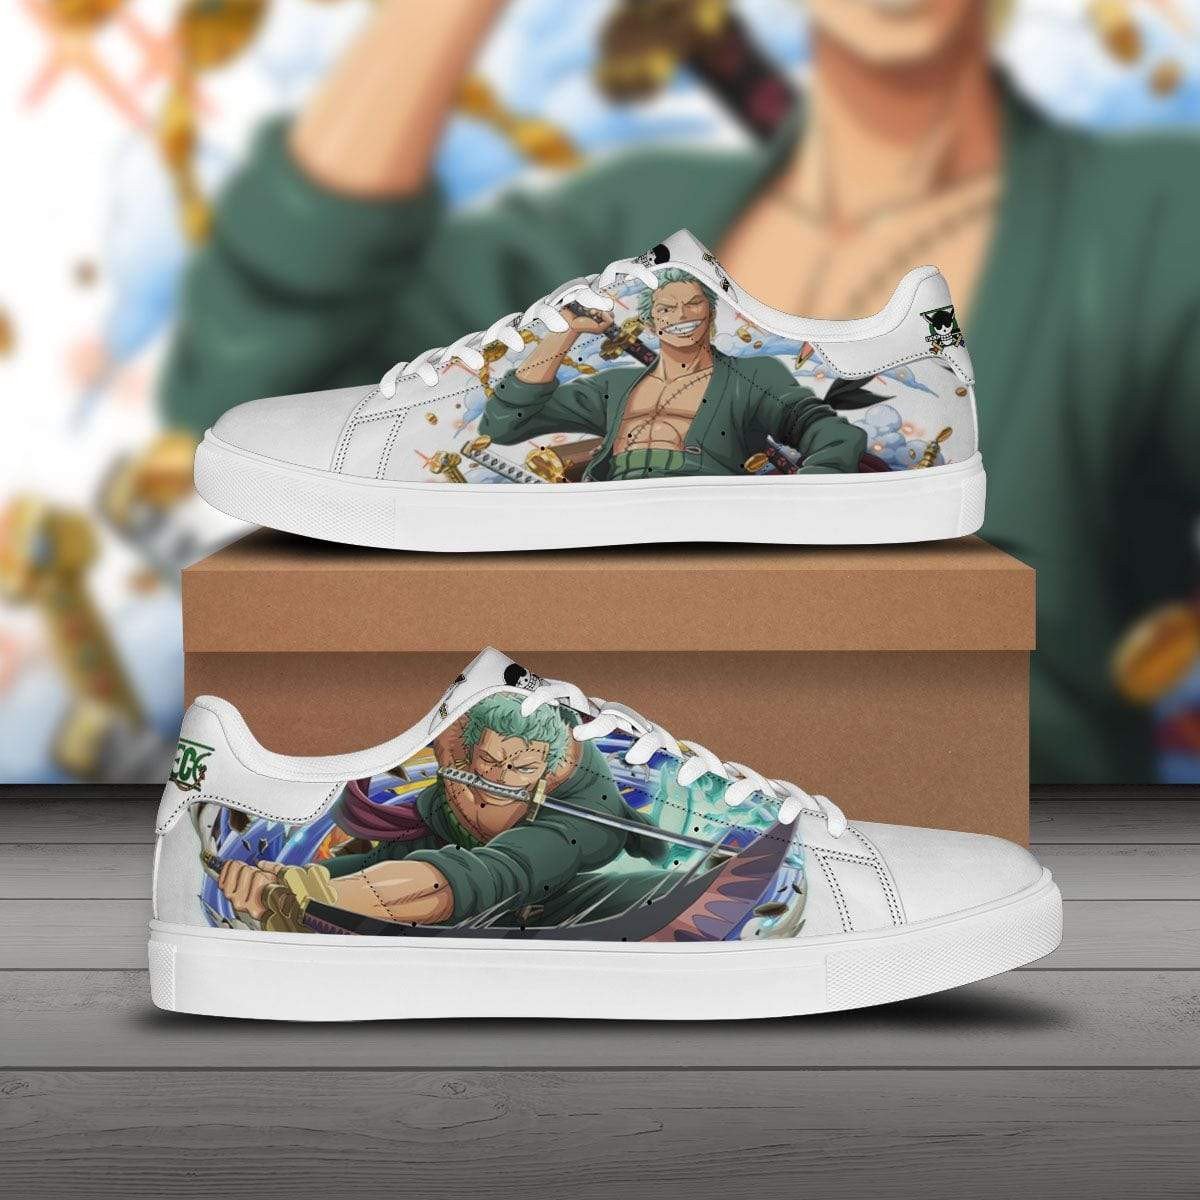 Trafalgar Law Skate Sneakers Custom One Piece Anime Shoes  Reallgraphics